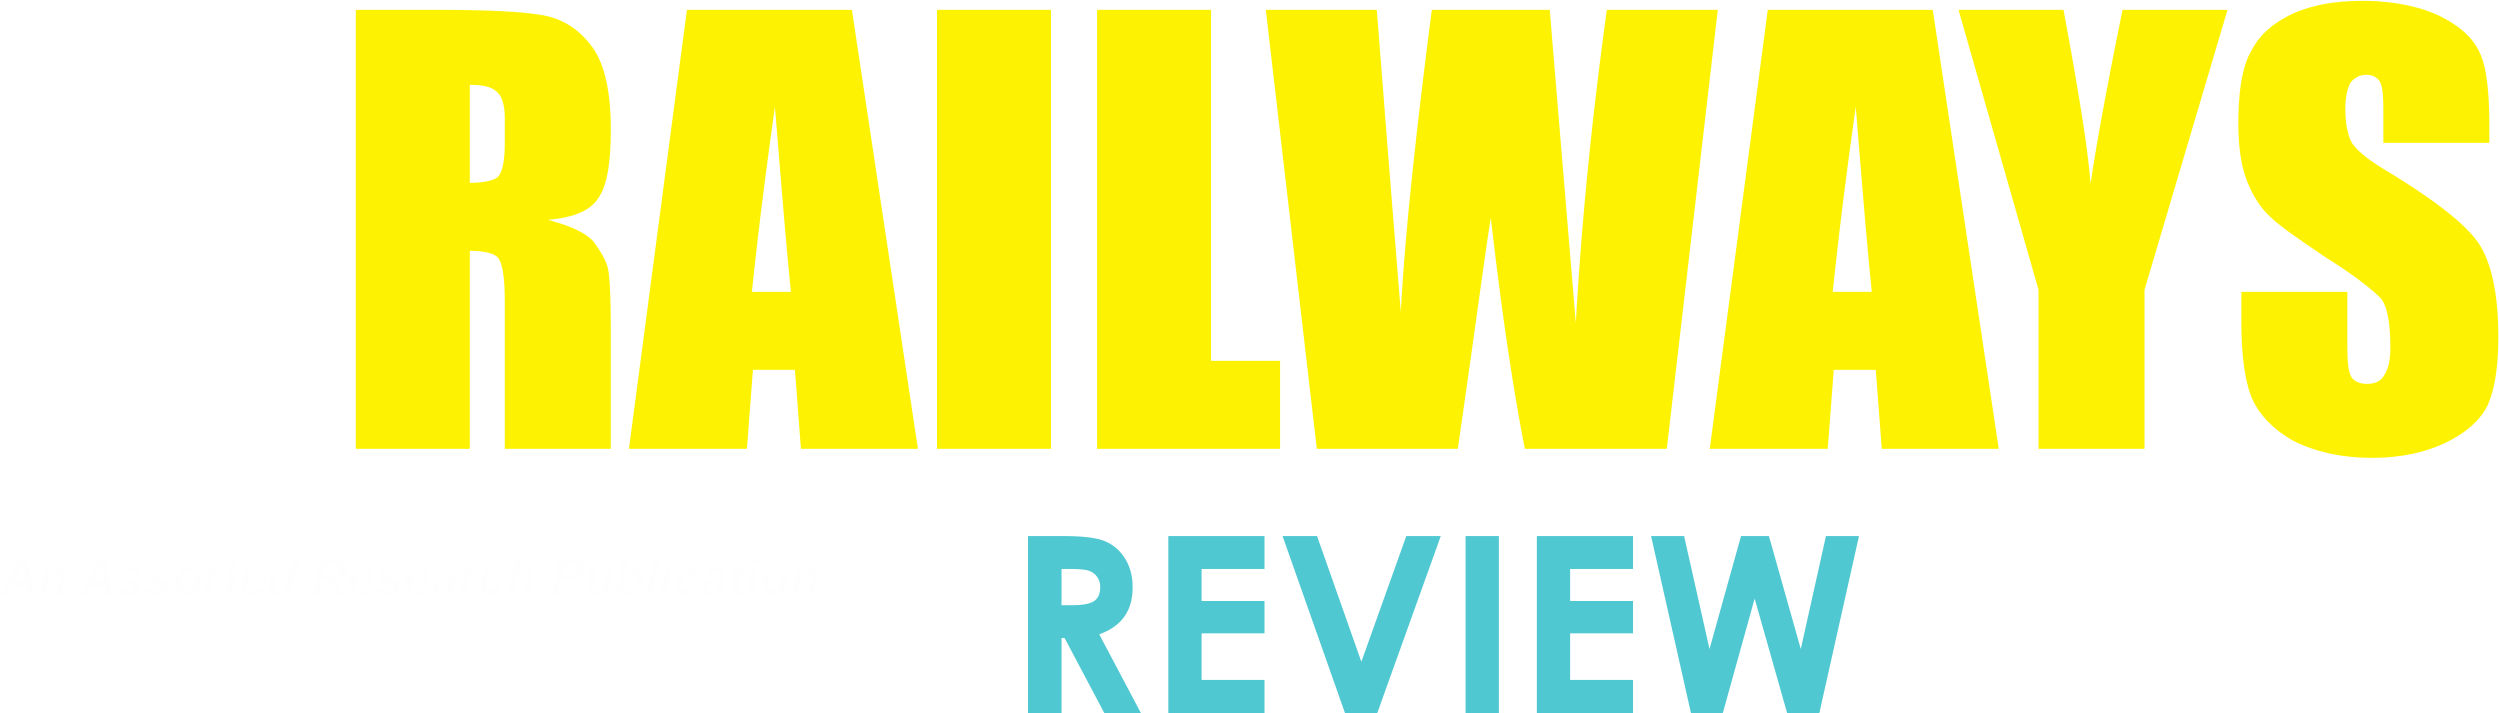 Railways Review